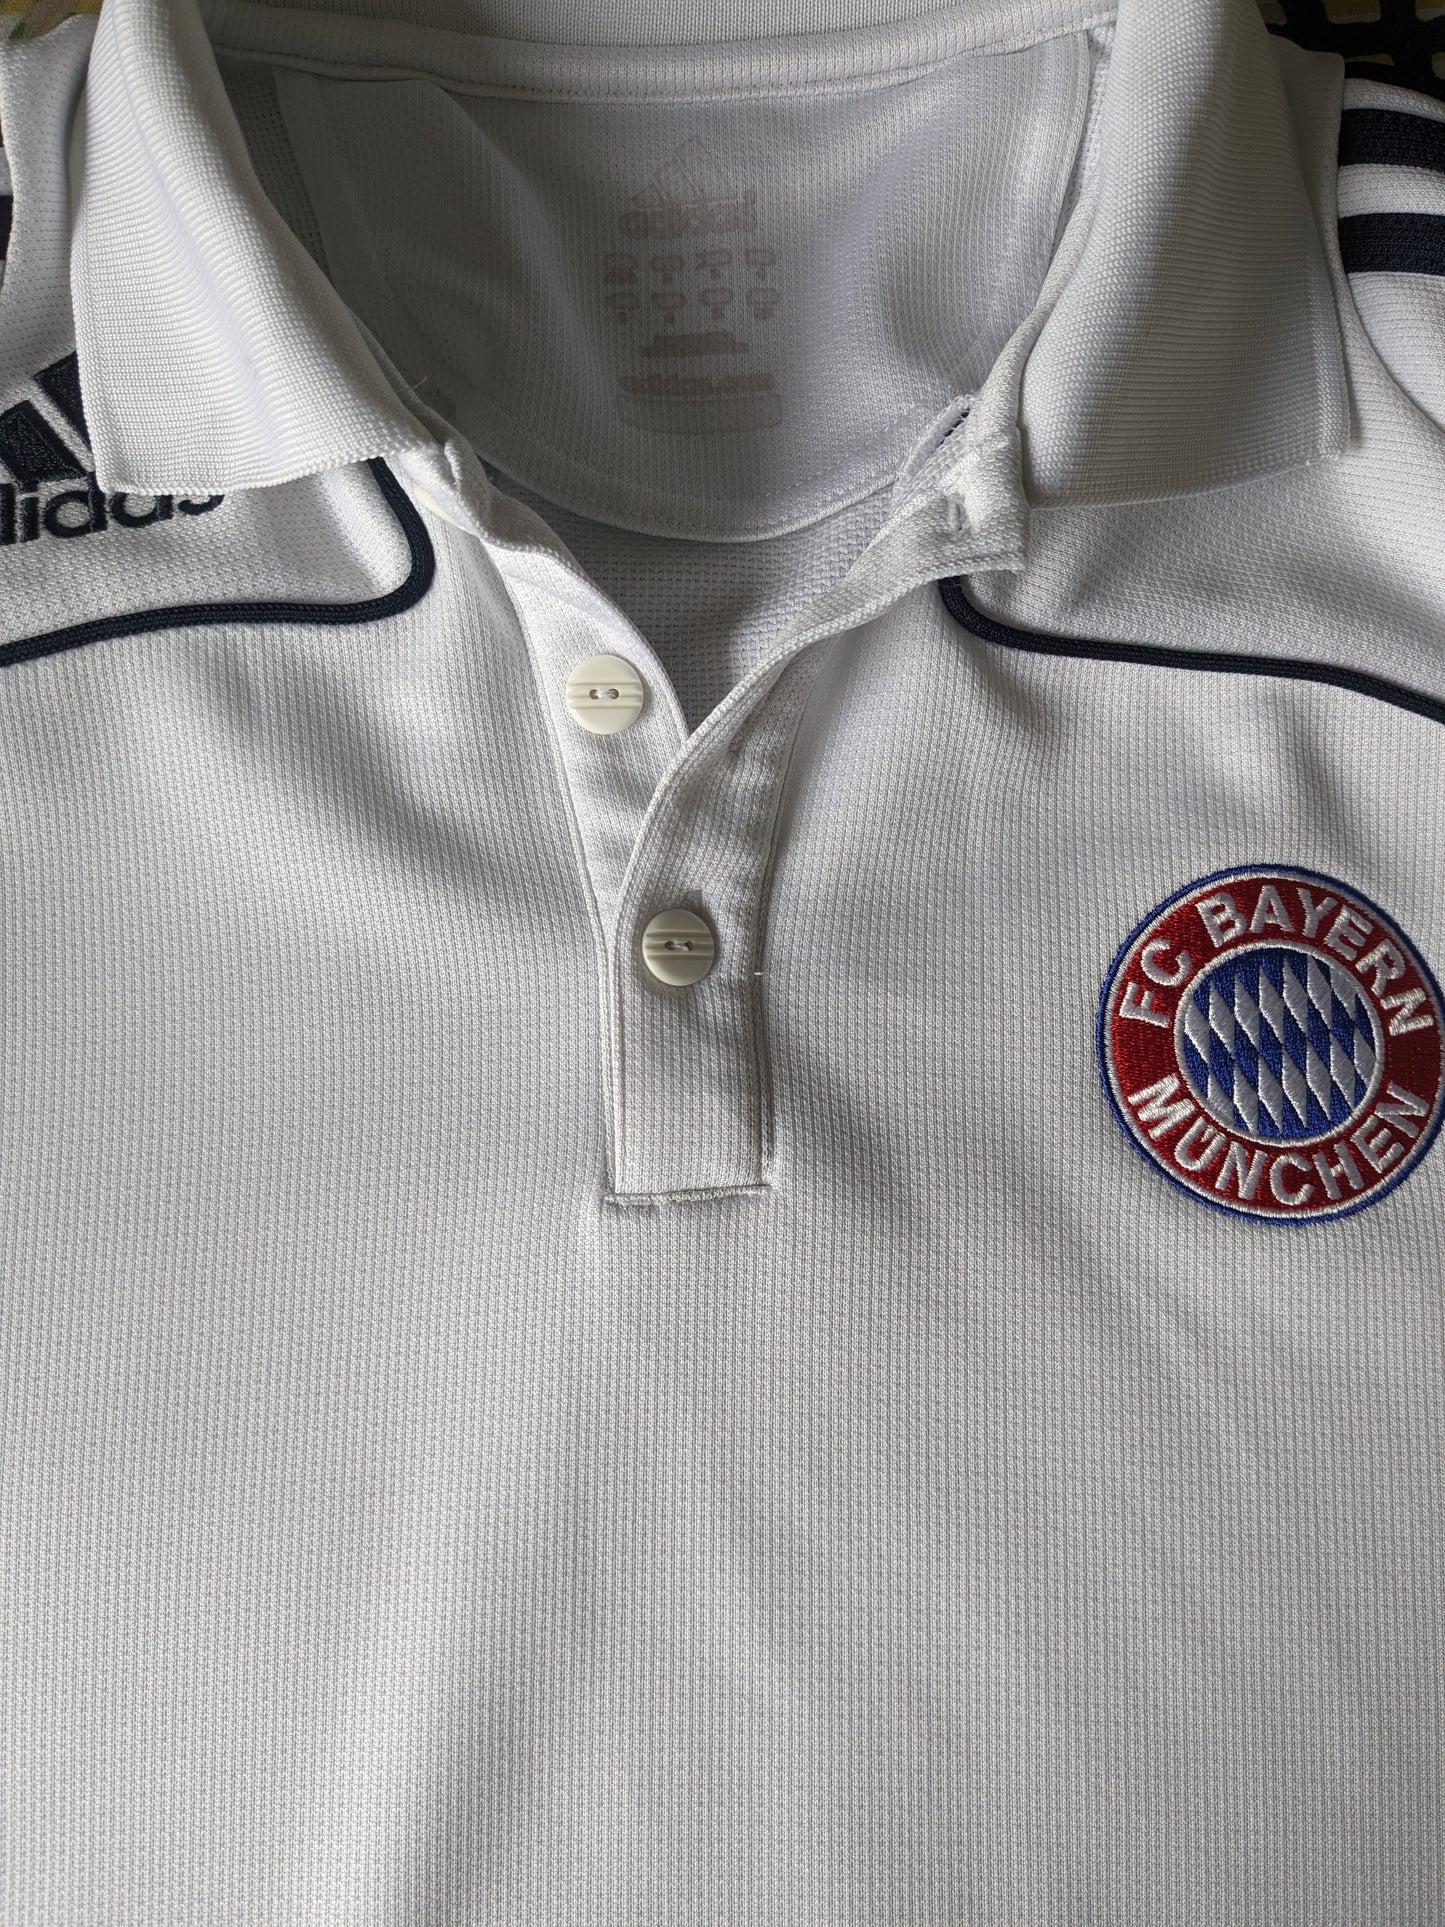 Adidas FC Bayern Munich Sport Polo. Blue white colored. Size S.